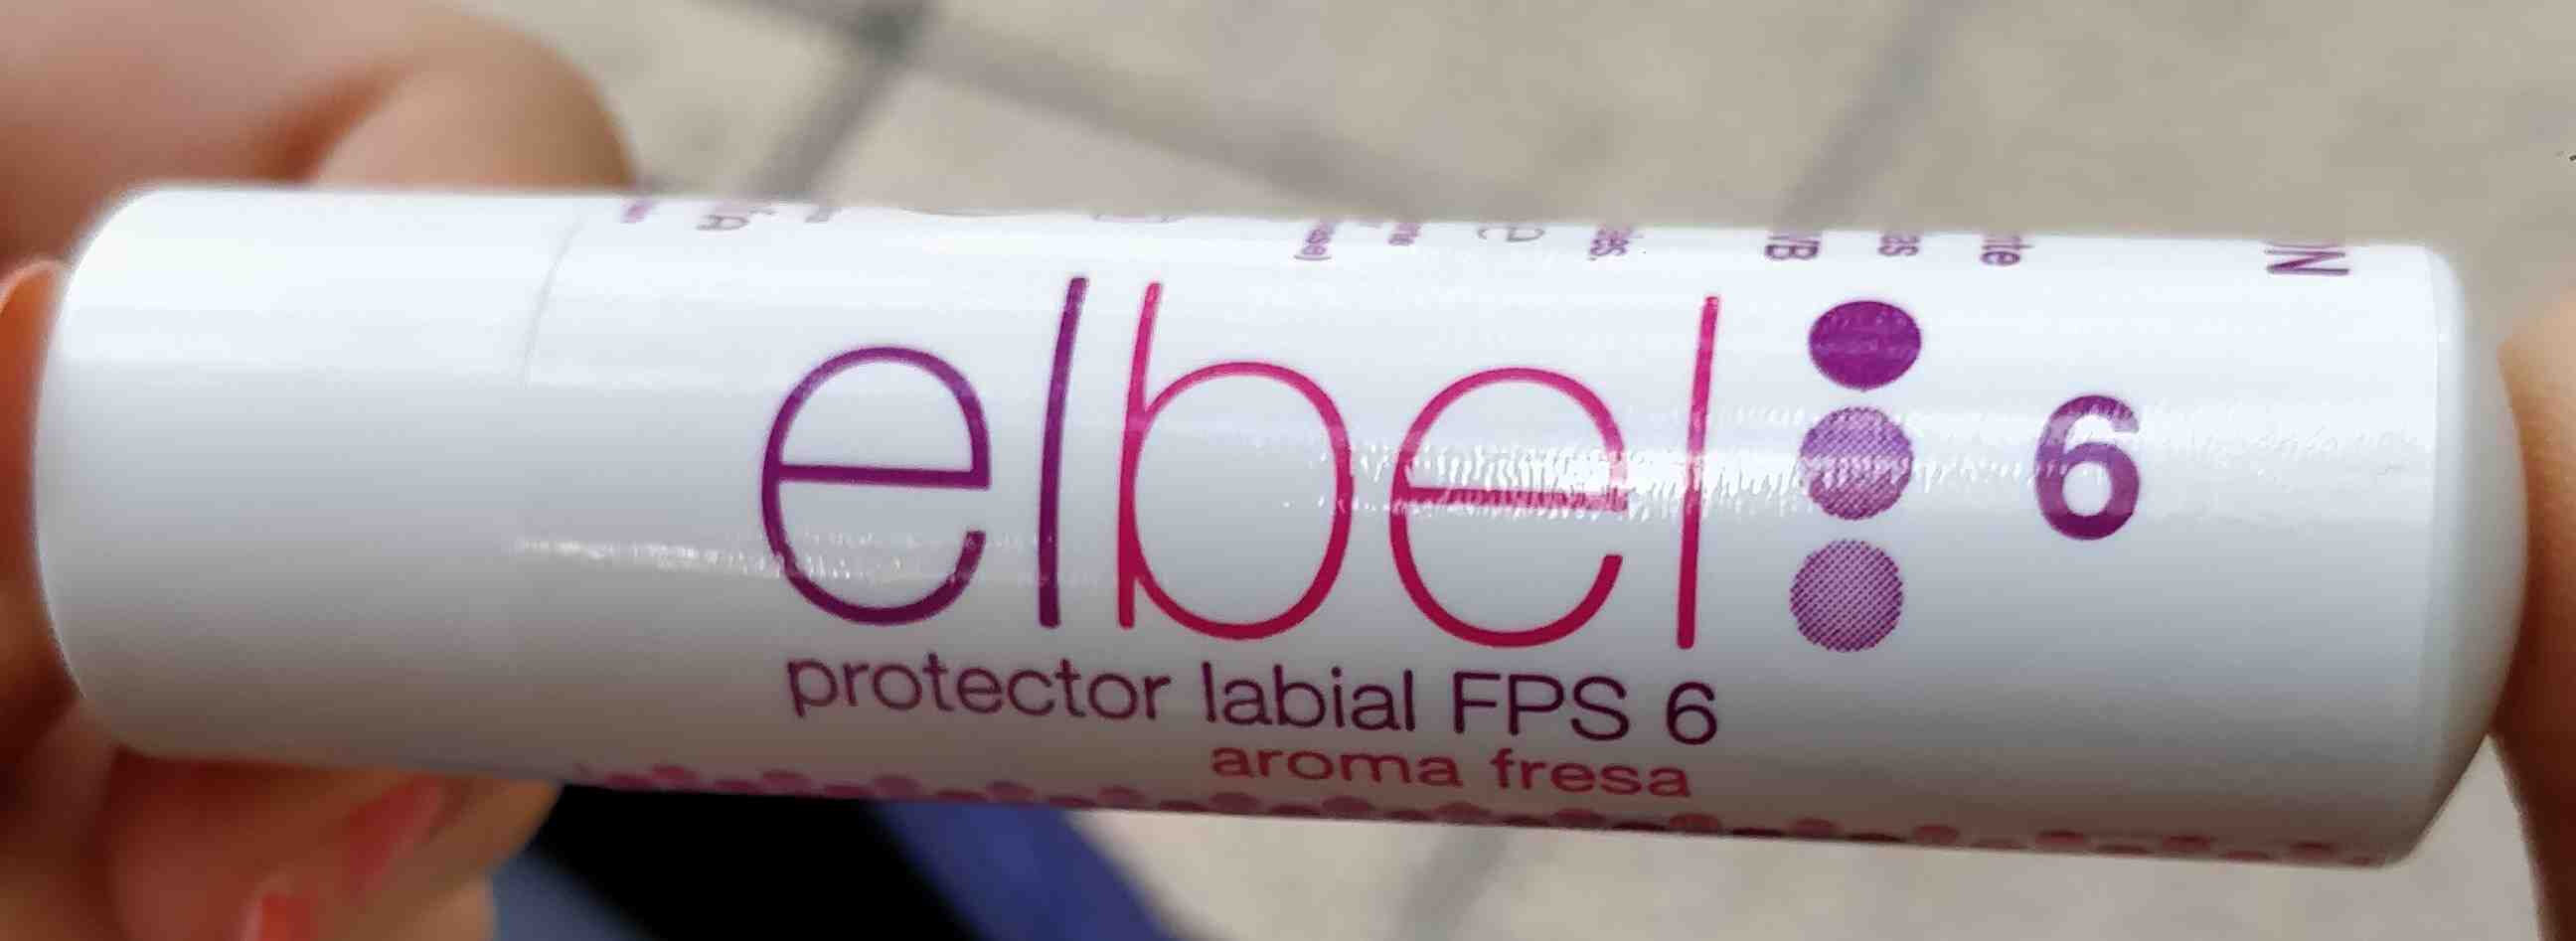 Protector labial FPS 6 aroma fresa - 製品 - en